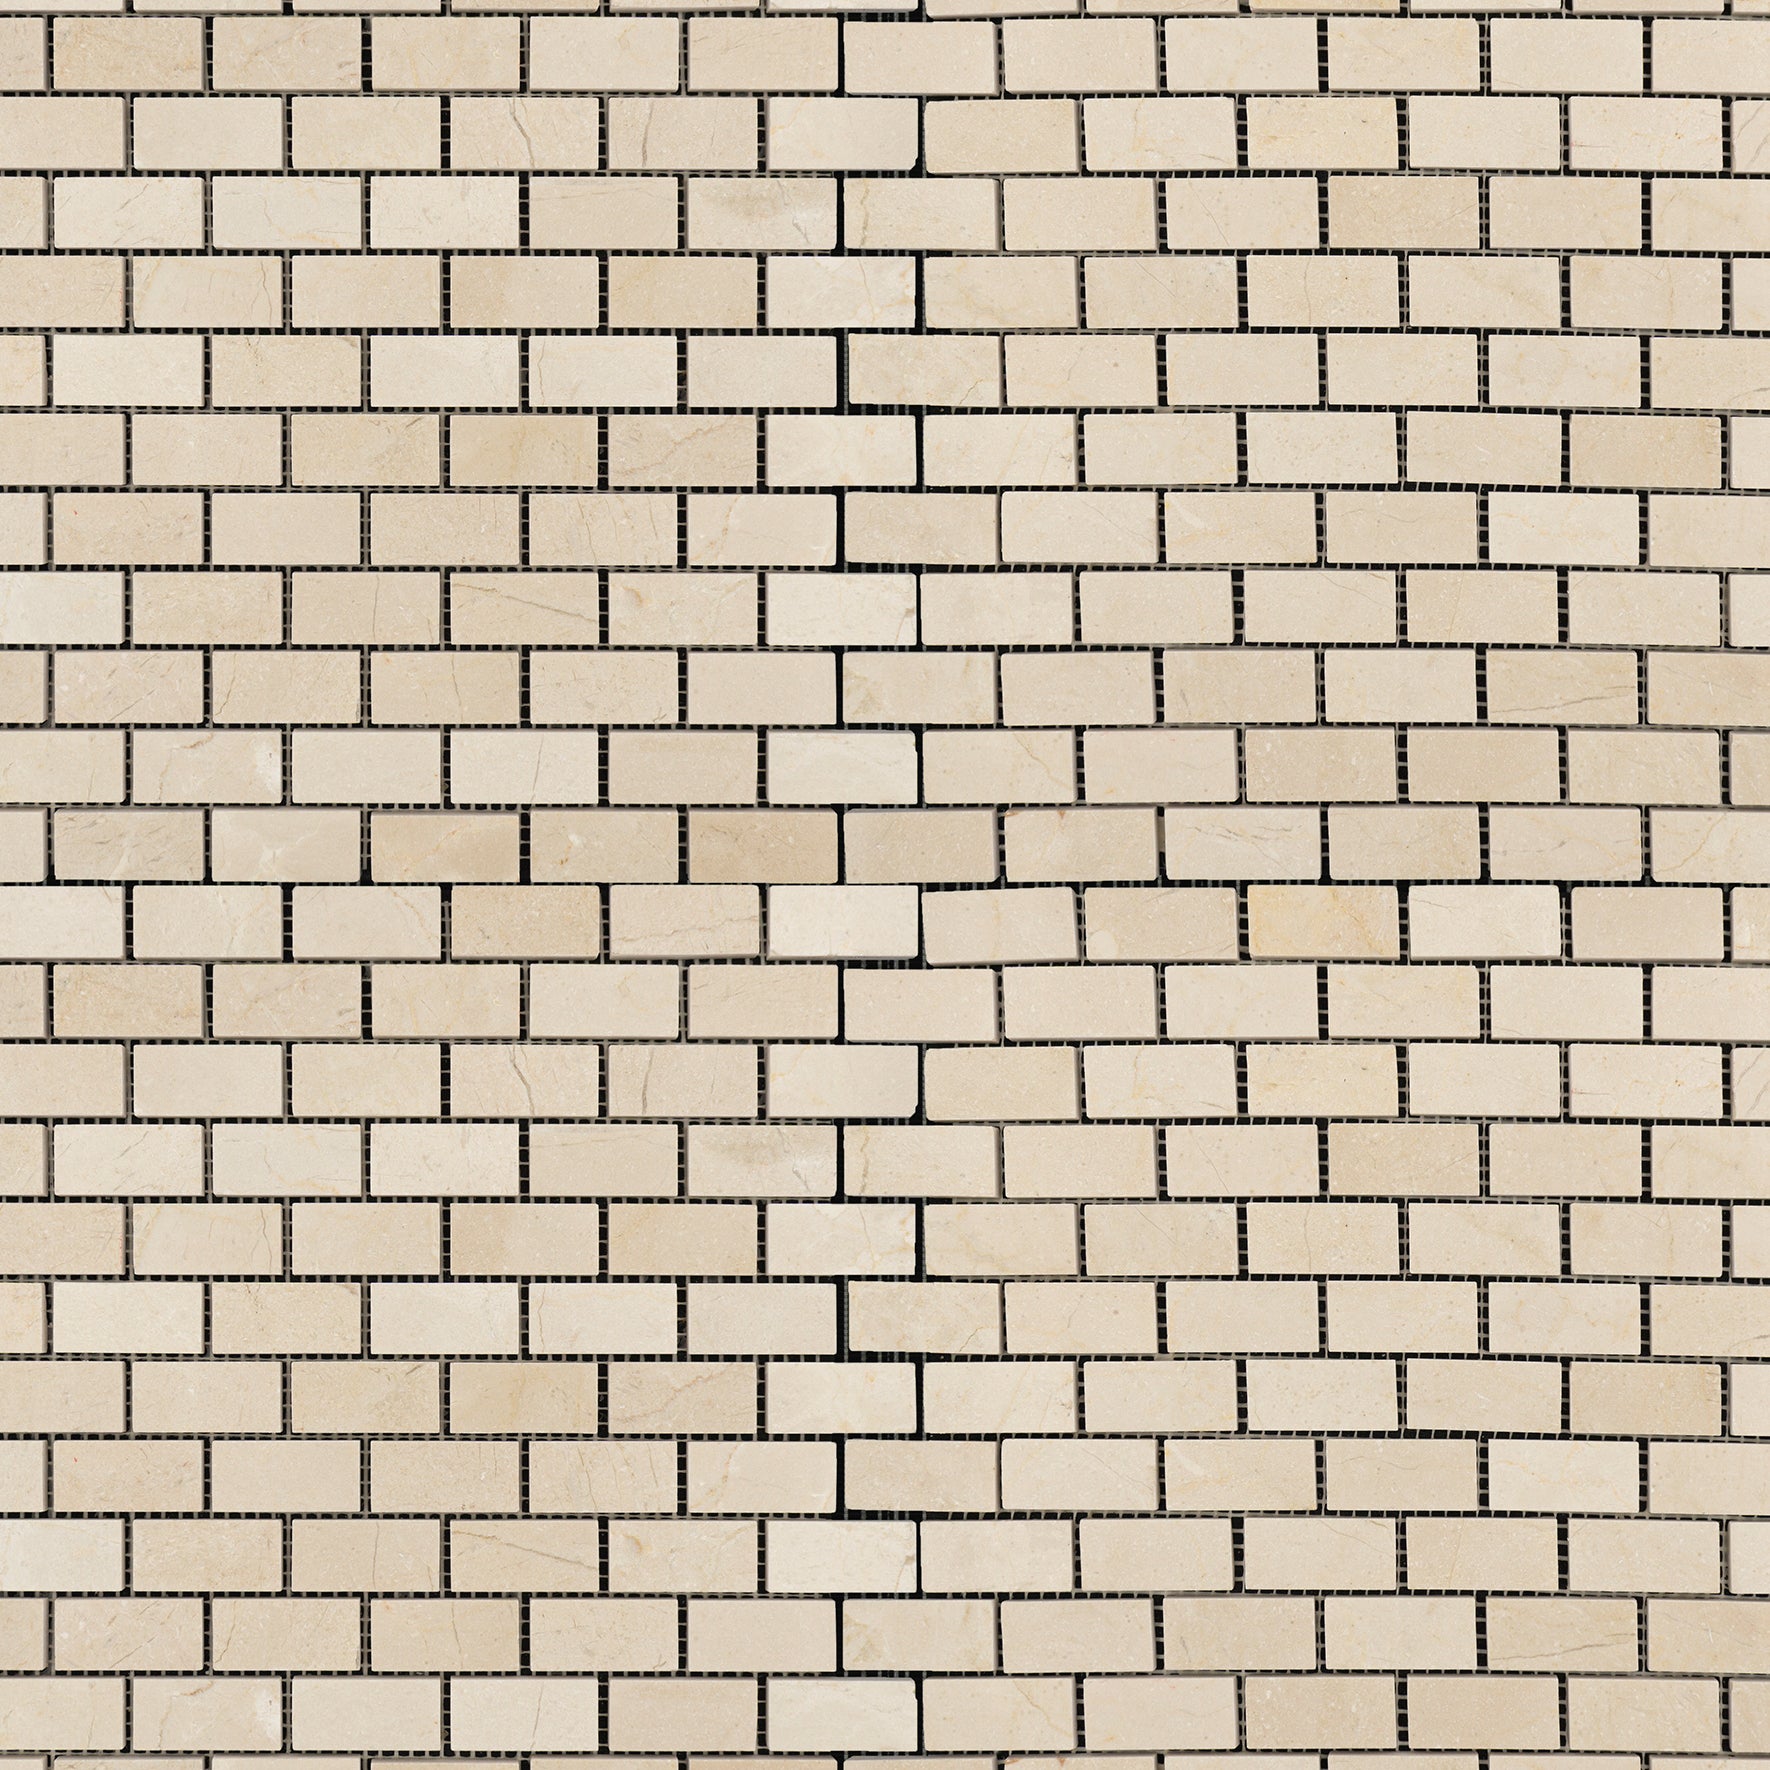 Crema Marfil Brick 1x2 Mosaic